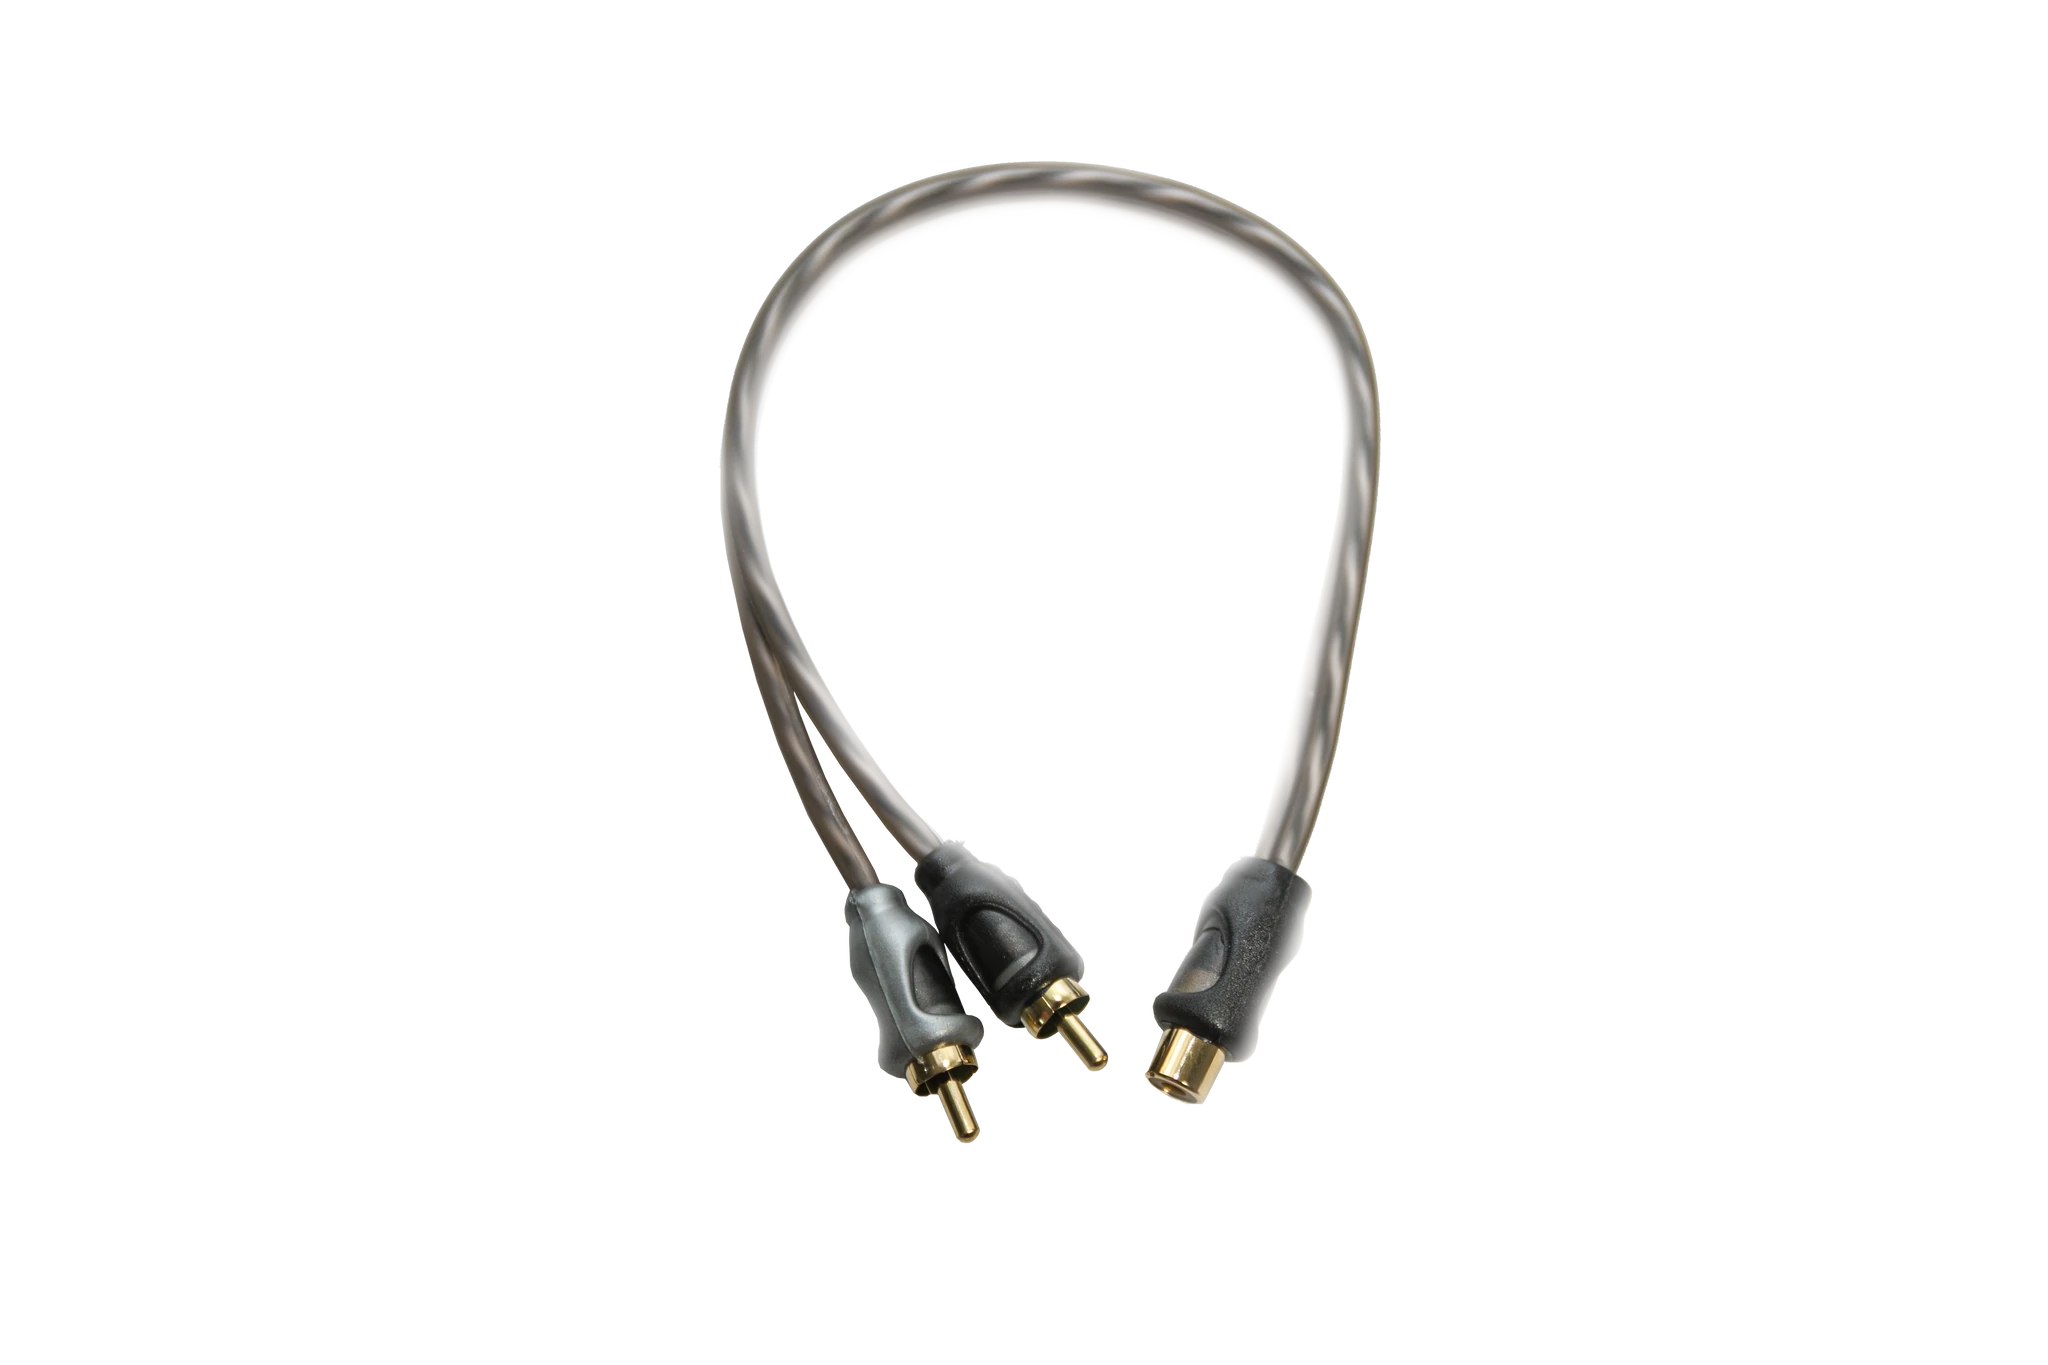 Supra Audio Pro RCA Y-adapter (2 RCA Plugs To 1 RCA Jack) 2M-1F – Chuchero  Express